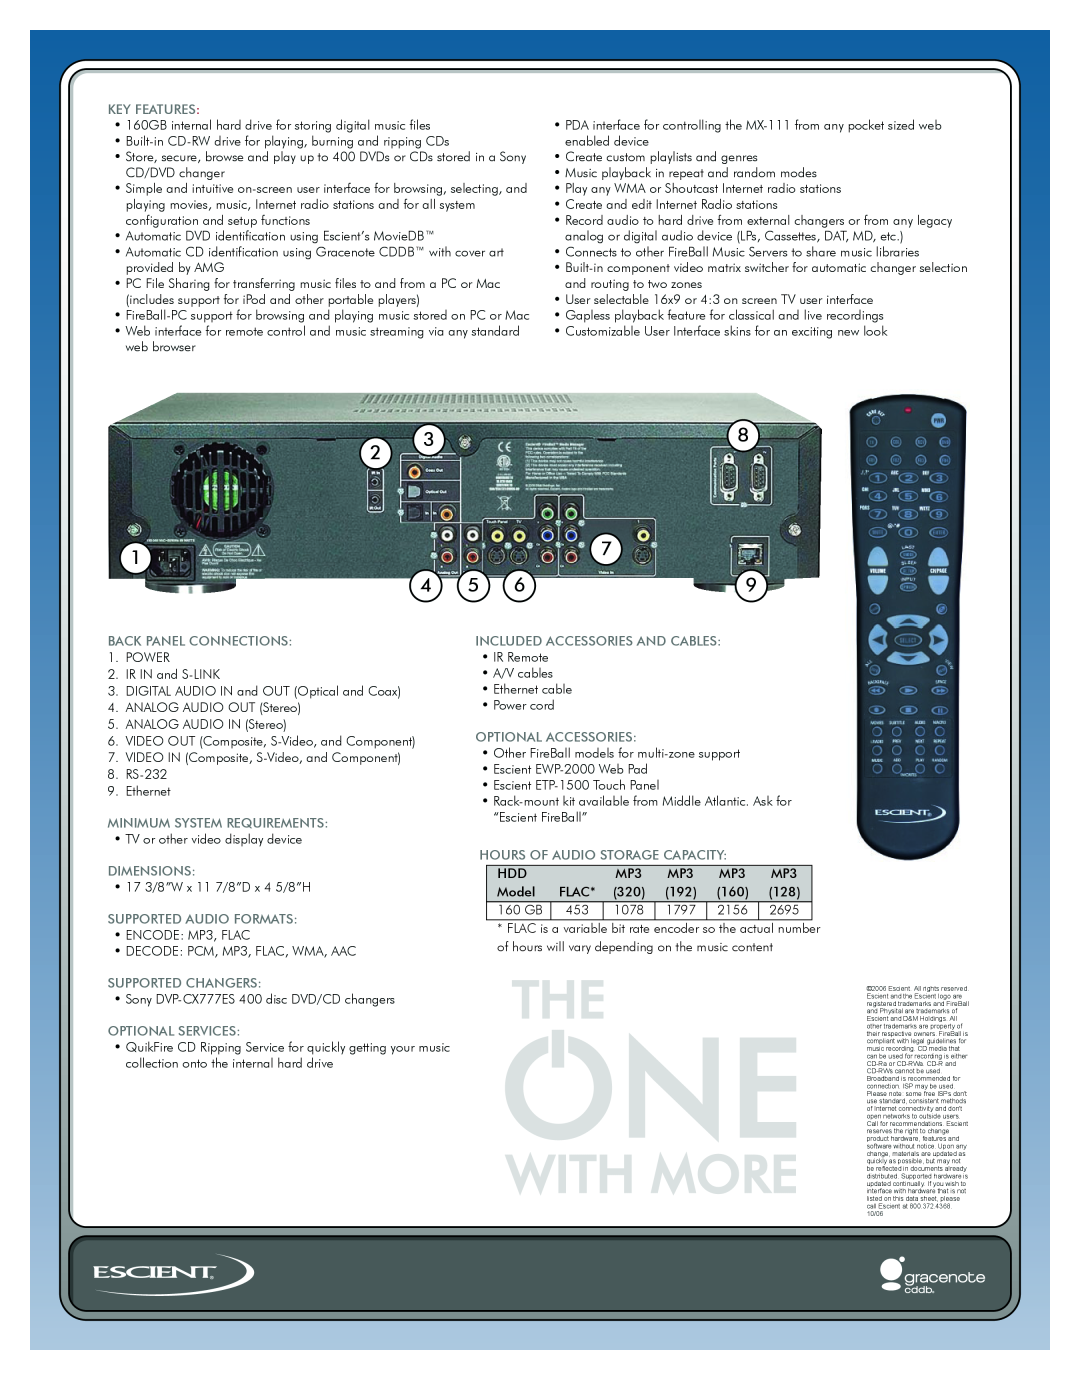 Escient MX-111 manual Key Features, Intech Blvd. Suite 250 Indianapolis, IN 